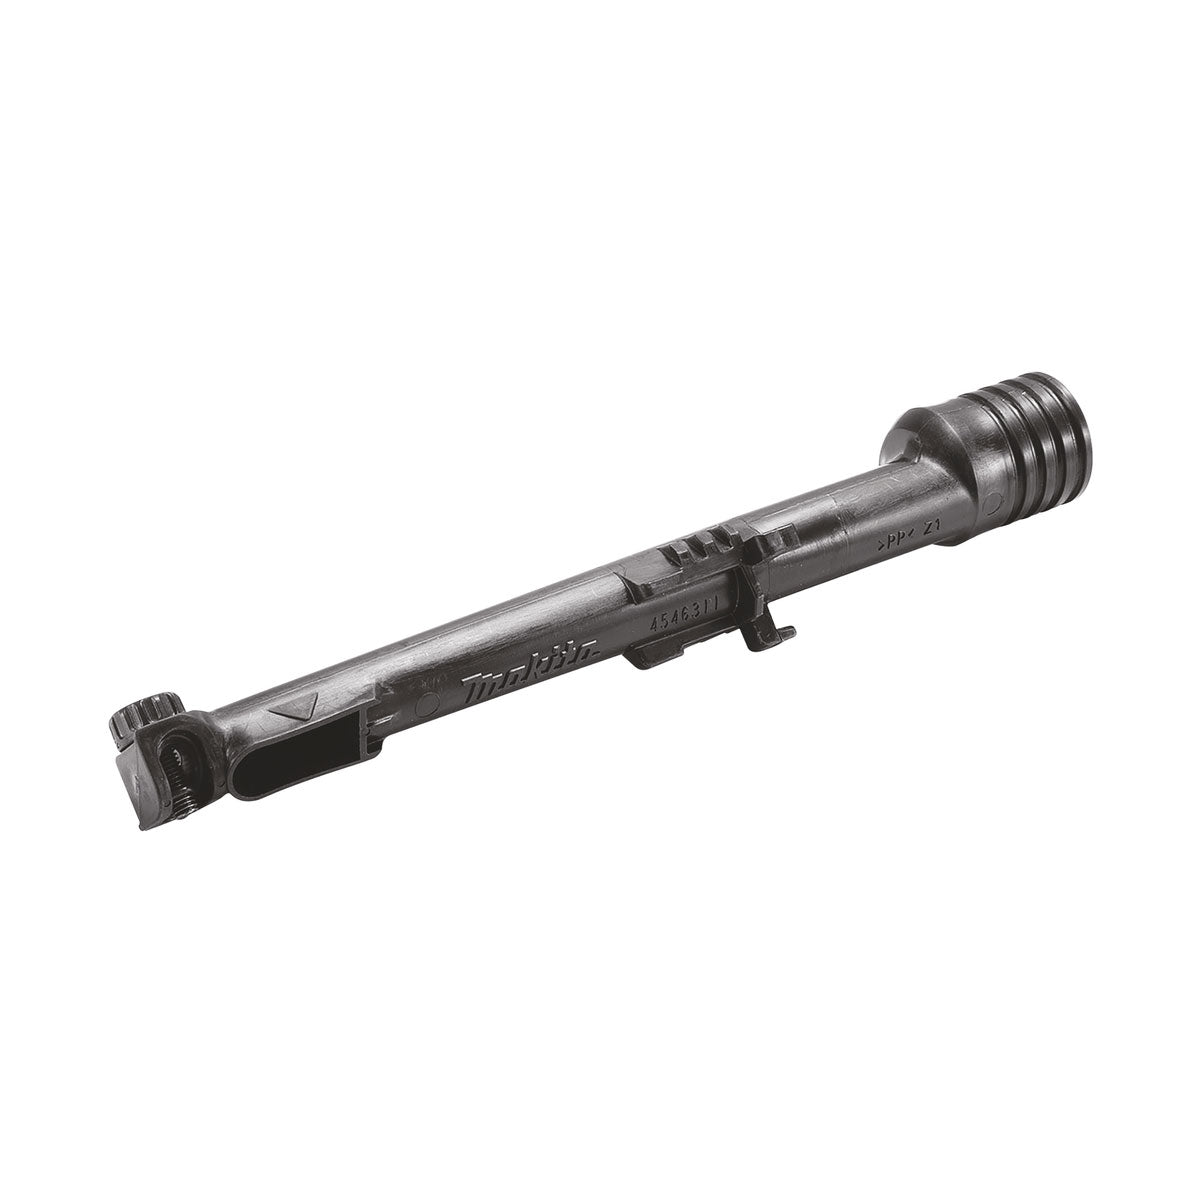 Makita 126331-0 Dust Nozzle Assembly 23/28mm For DJV181 & DJV182